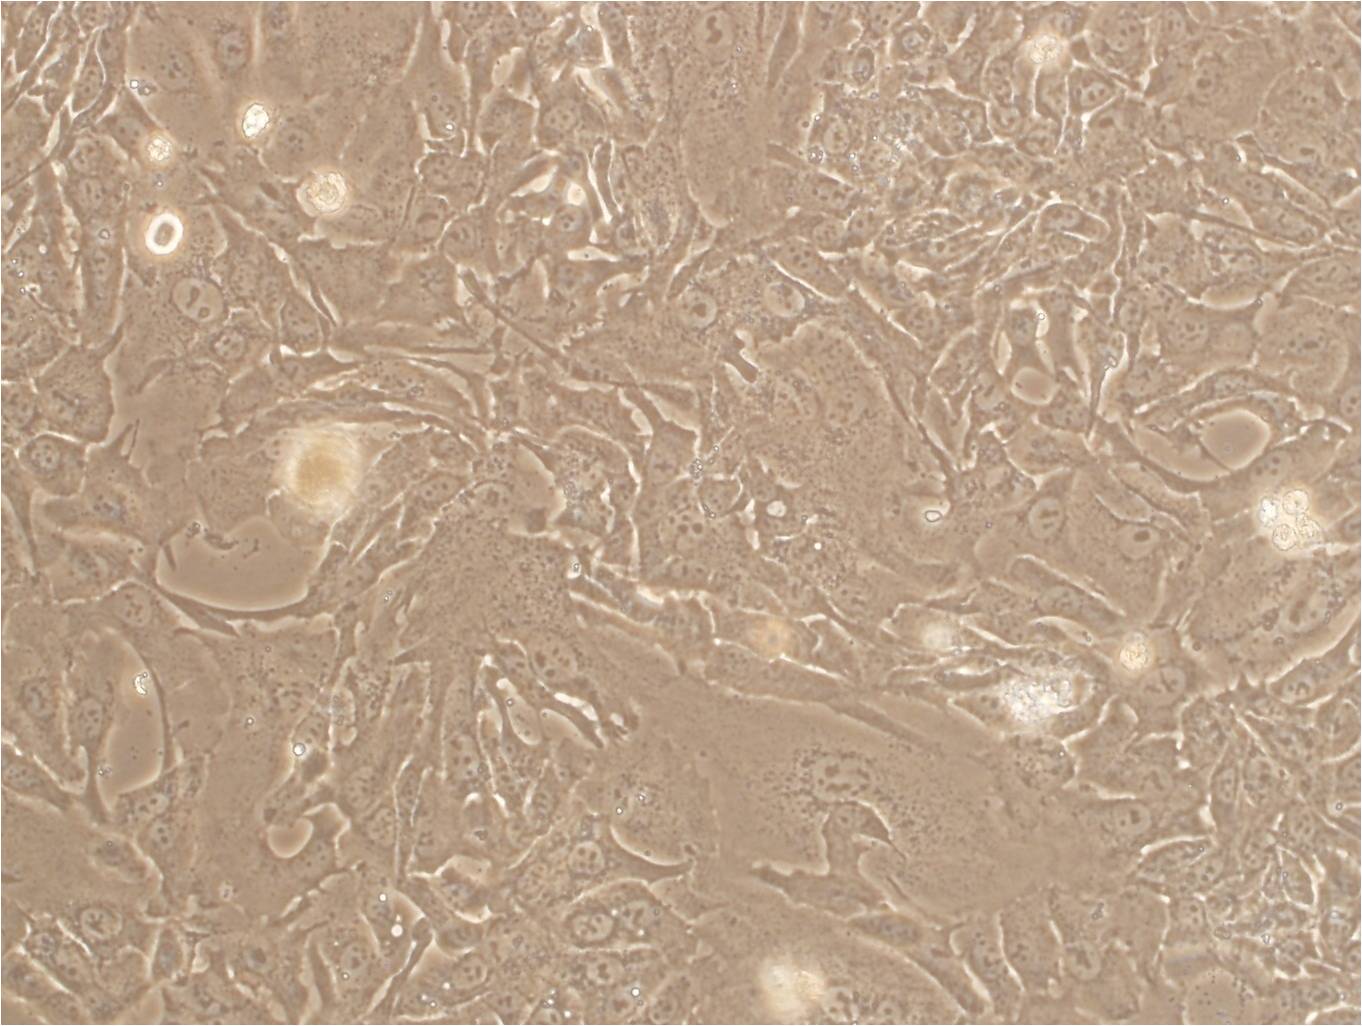 SK-OV-3 cell line人卵巢癌细胞系